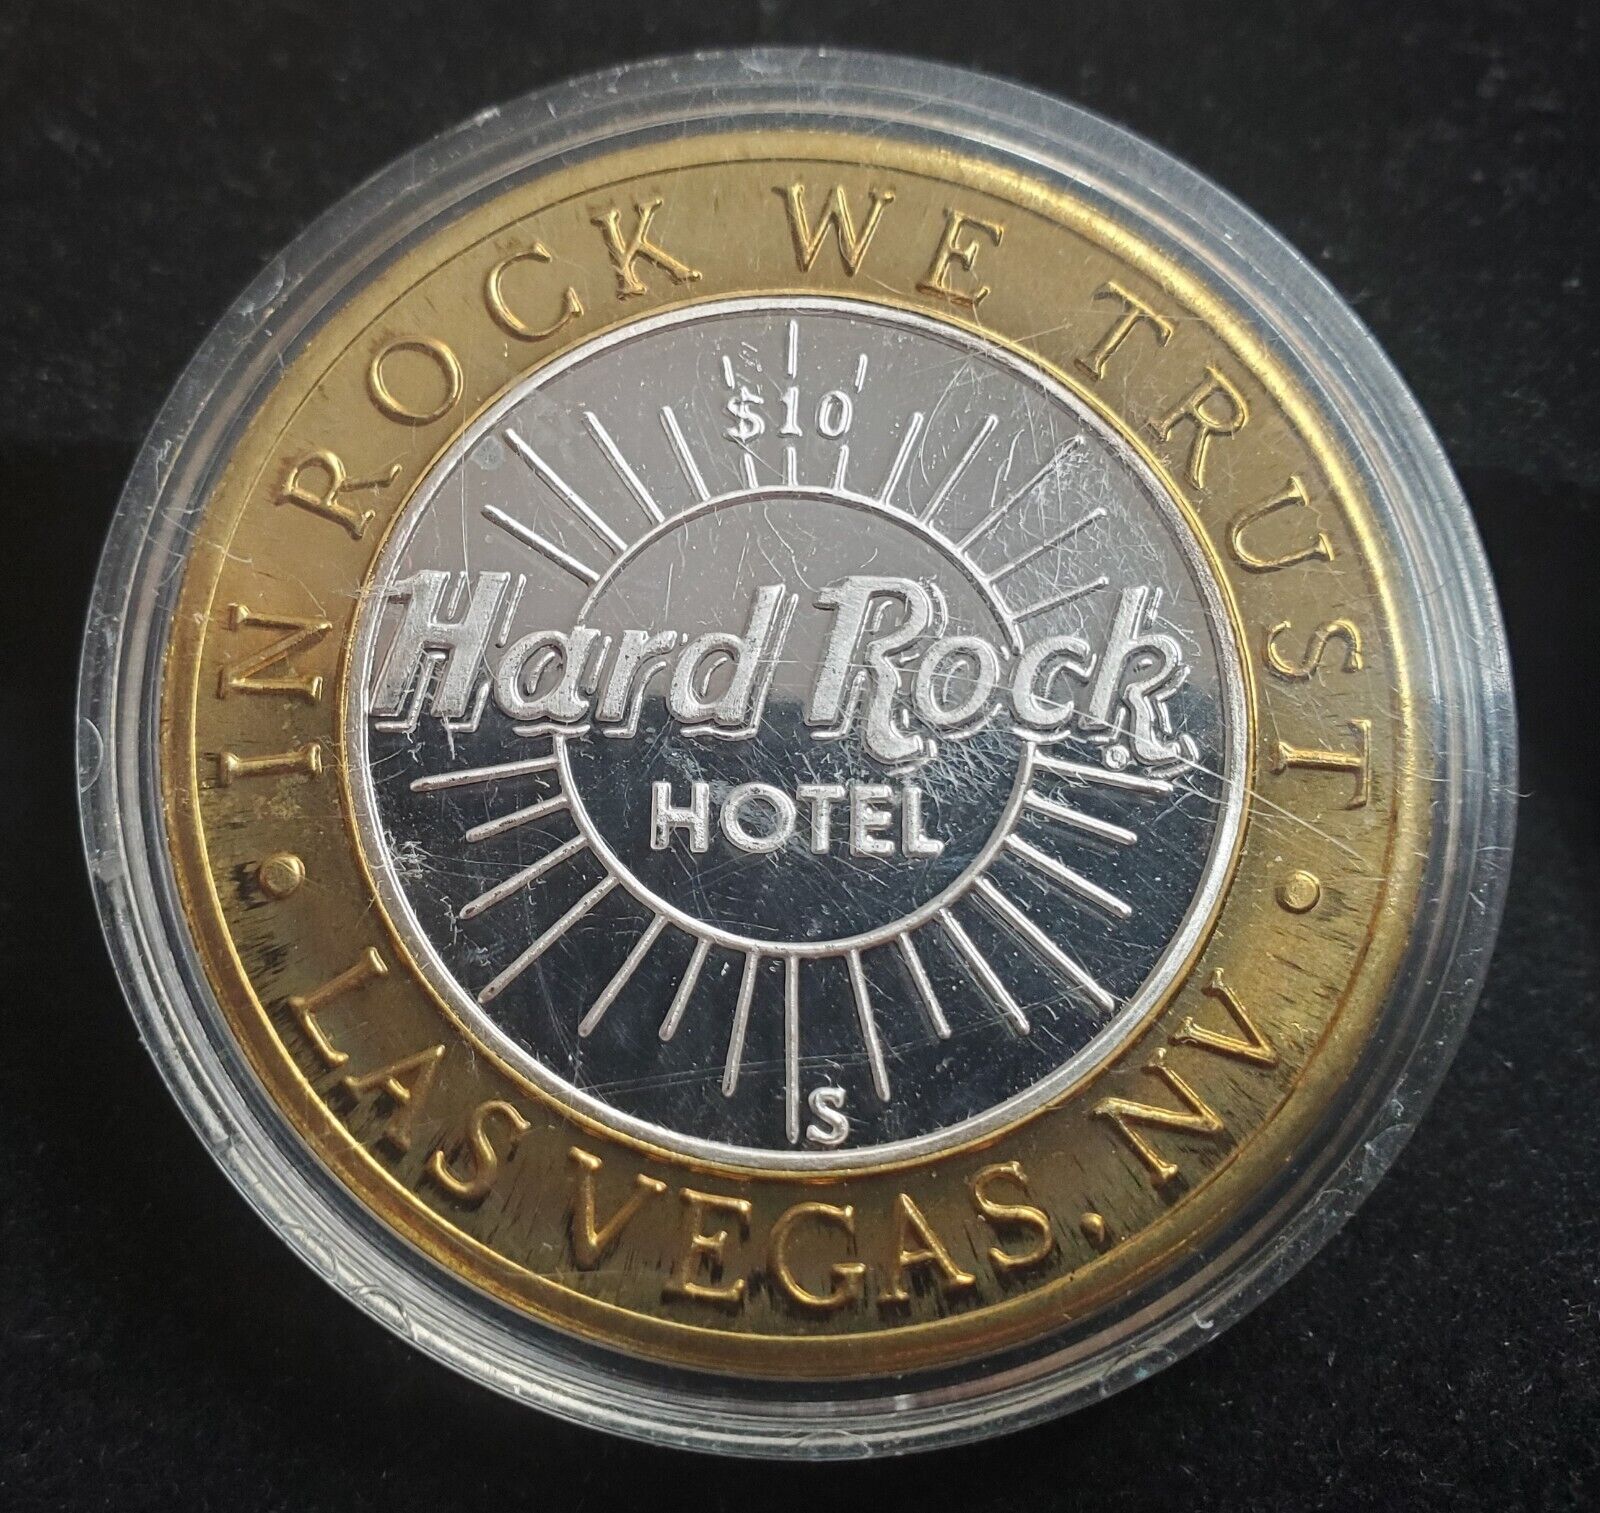 MR. Lucky Hard Rock Hotel Silver $10 Gaming Casino Token - Las Vegas, NV